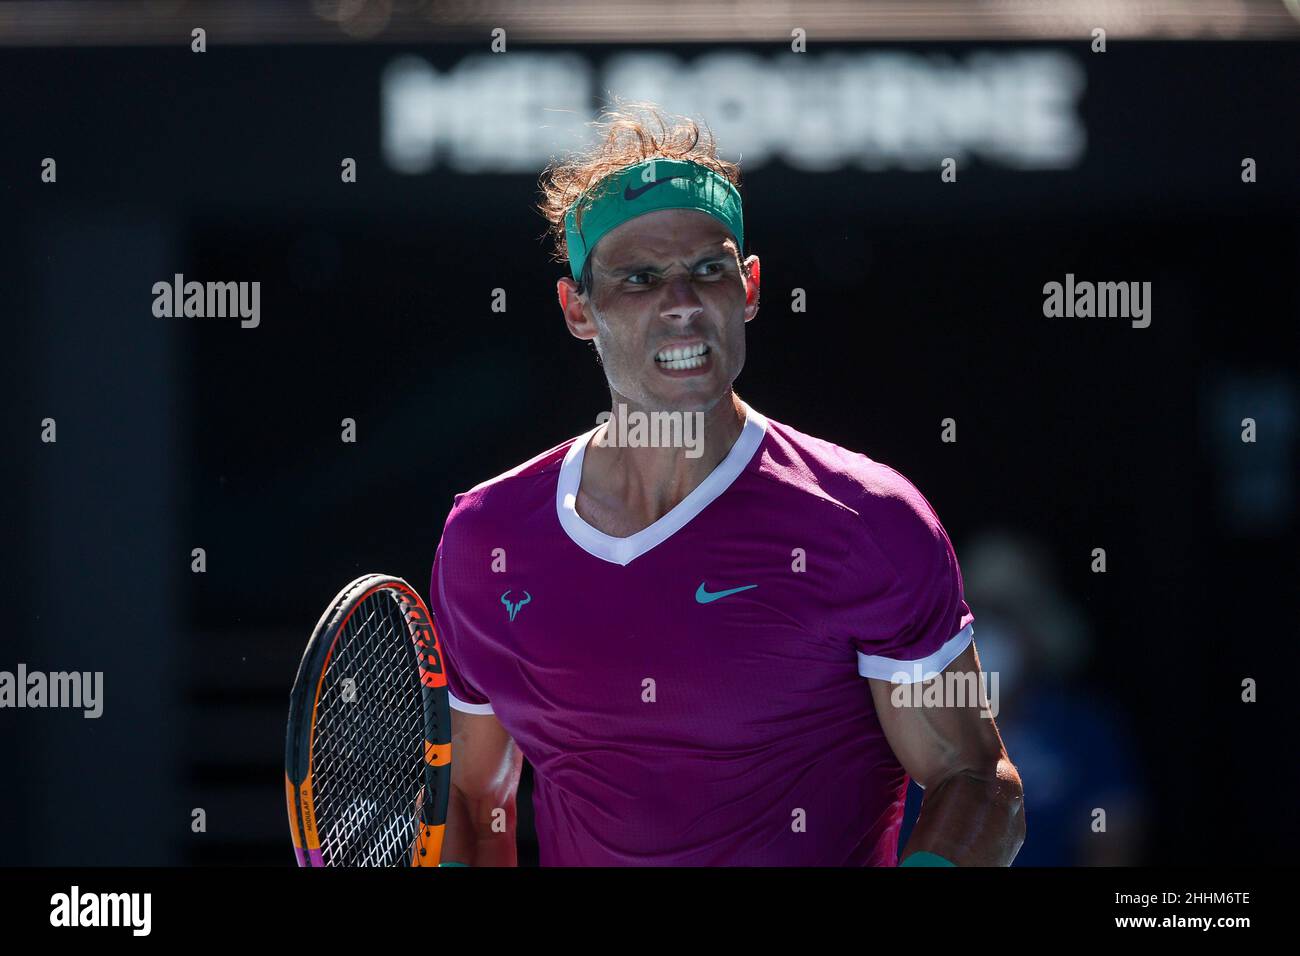 Melbourne, Australien. 25th. Januar 2022. Der spanische Tennisspieler Rafael Nadal feiert während des Australian Open Turniers am Dienstag, den 25January 2022. © Jürgen Hasenkopf / Alamy Live News Stockfoto